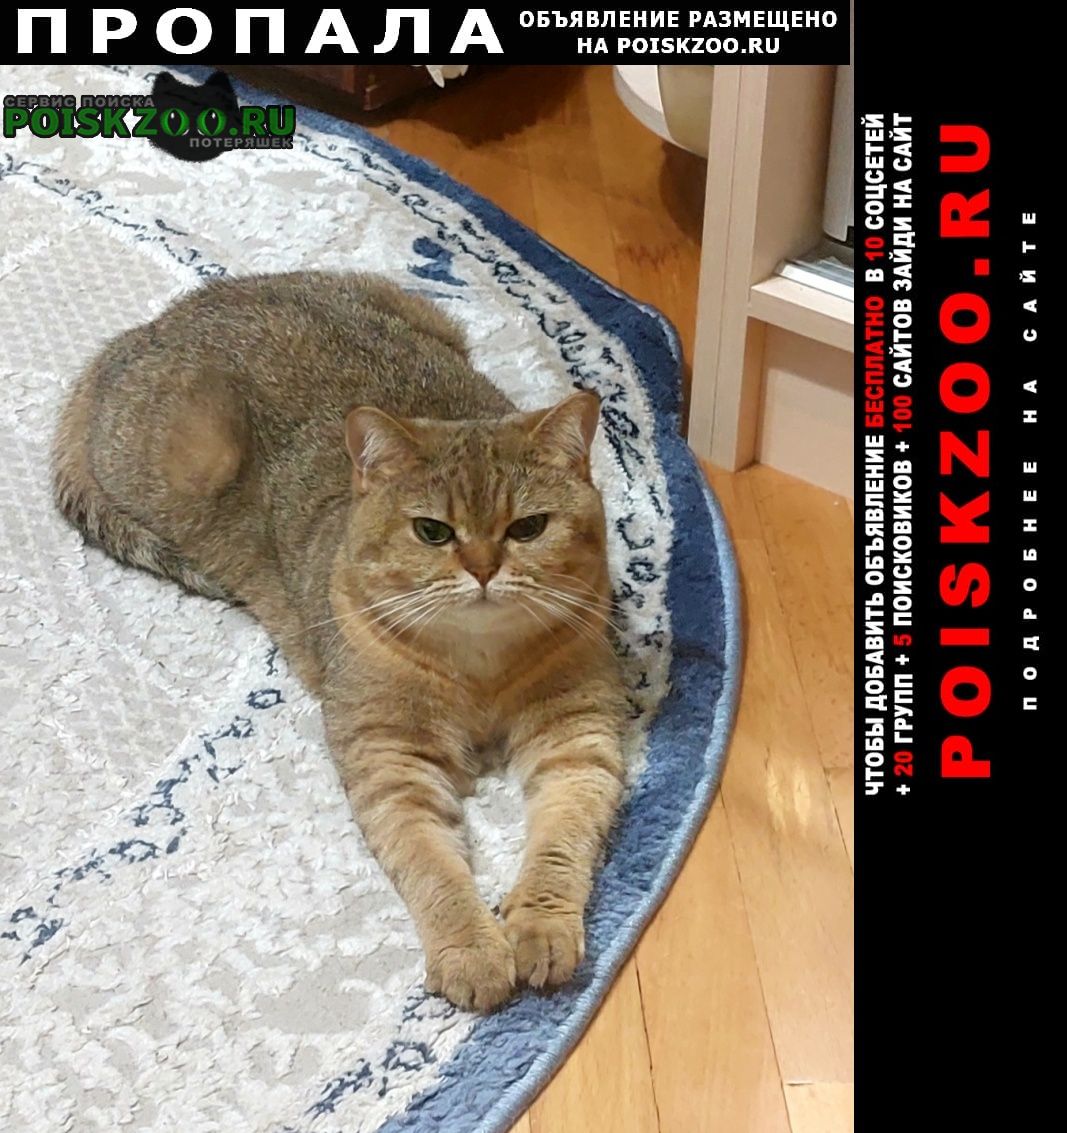 Москва Пропала кошка срочно